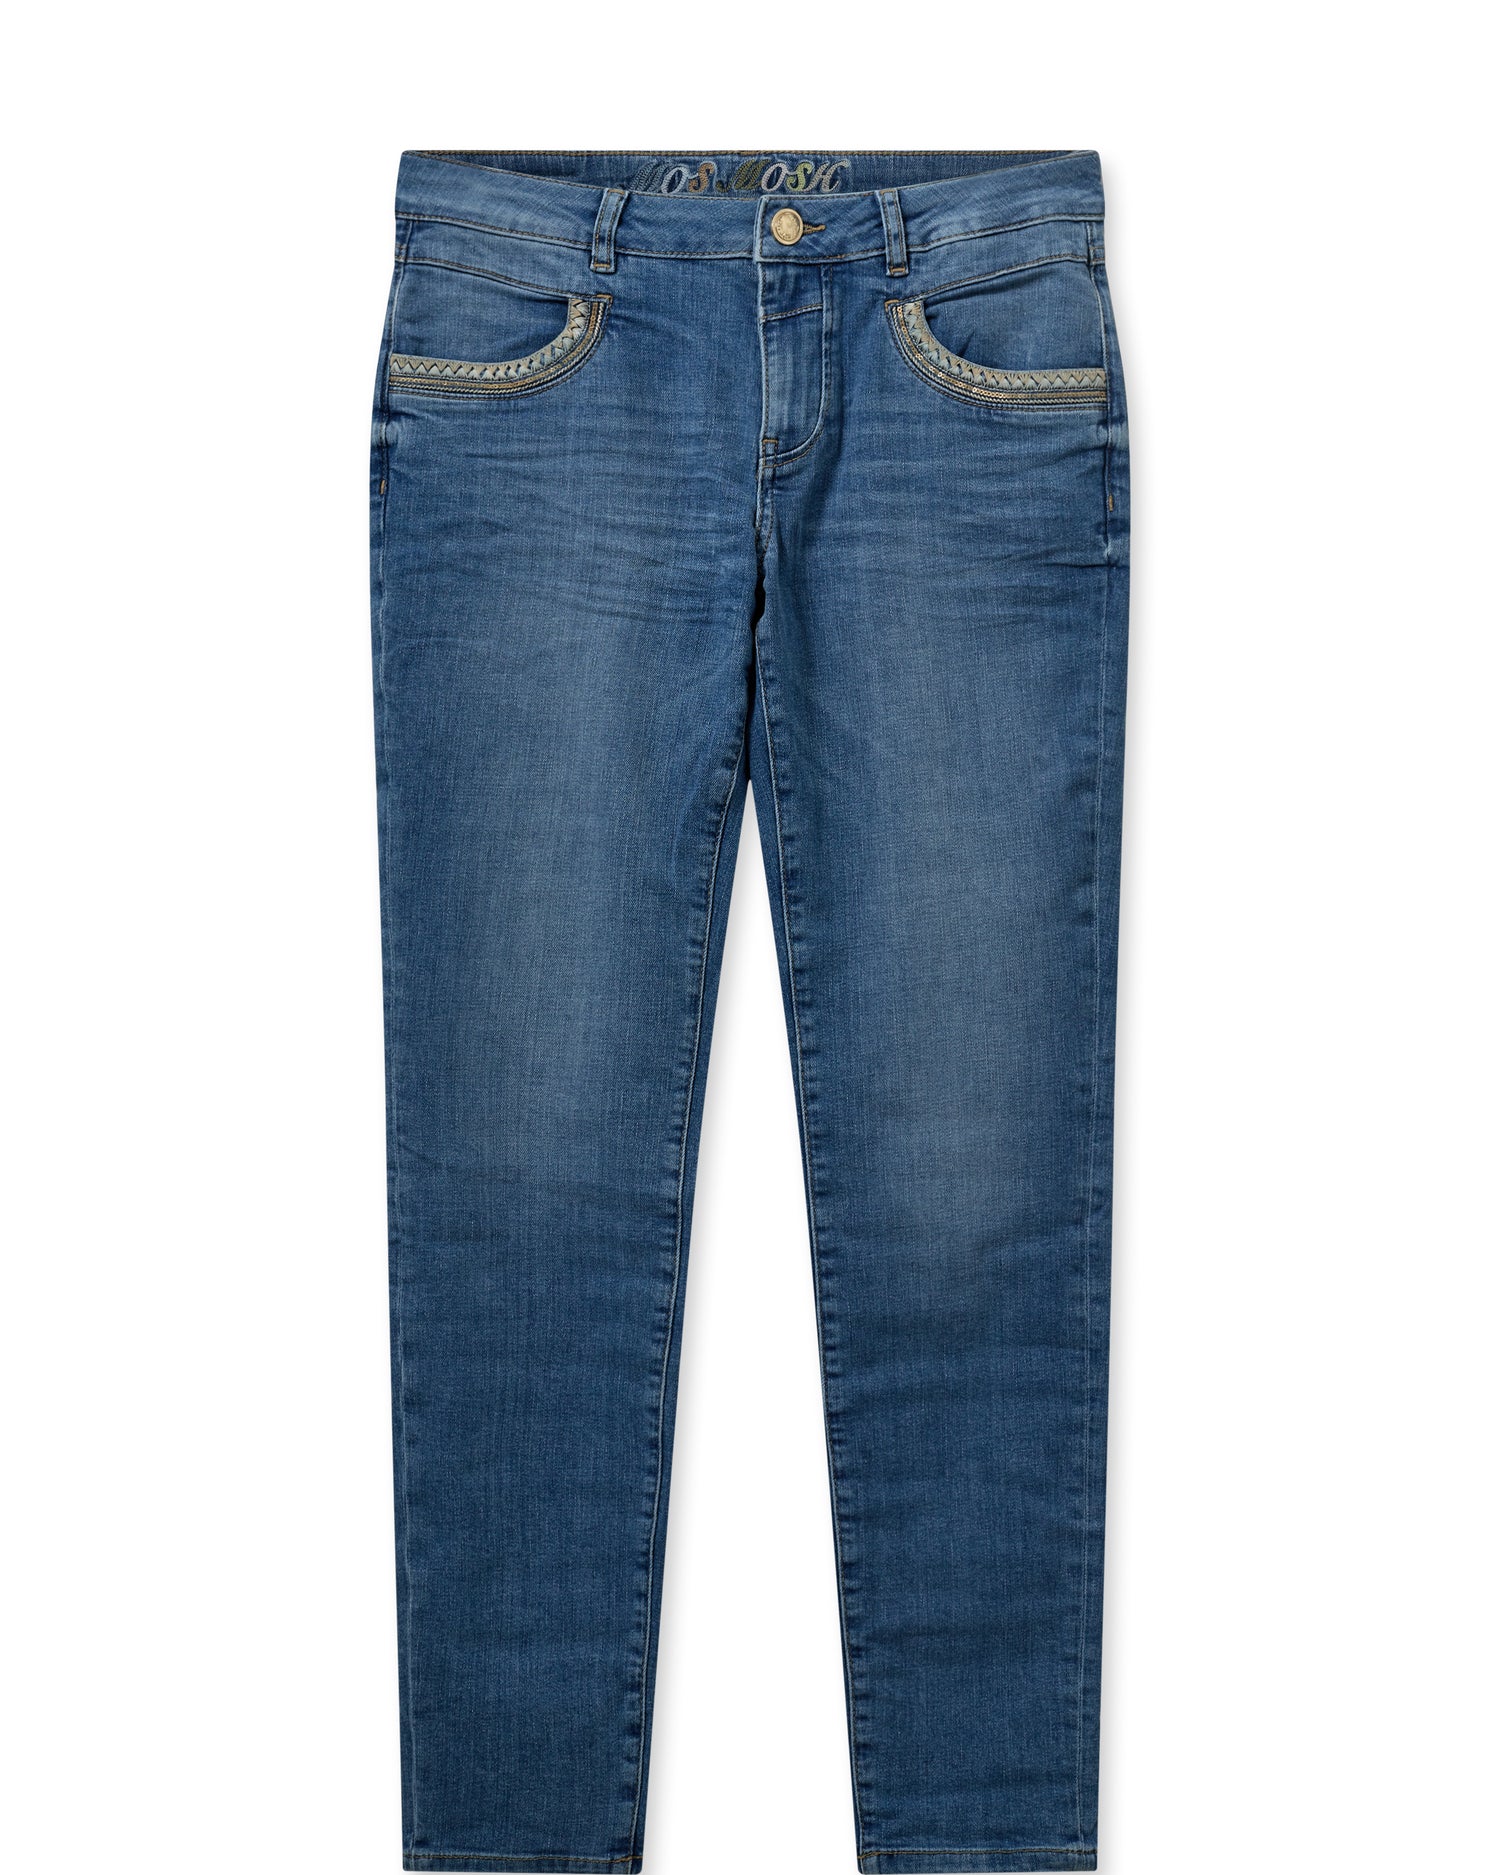 Jeans - NAOMI DIVA JEANS - Blue